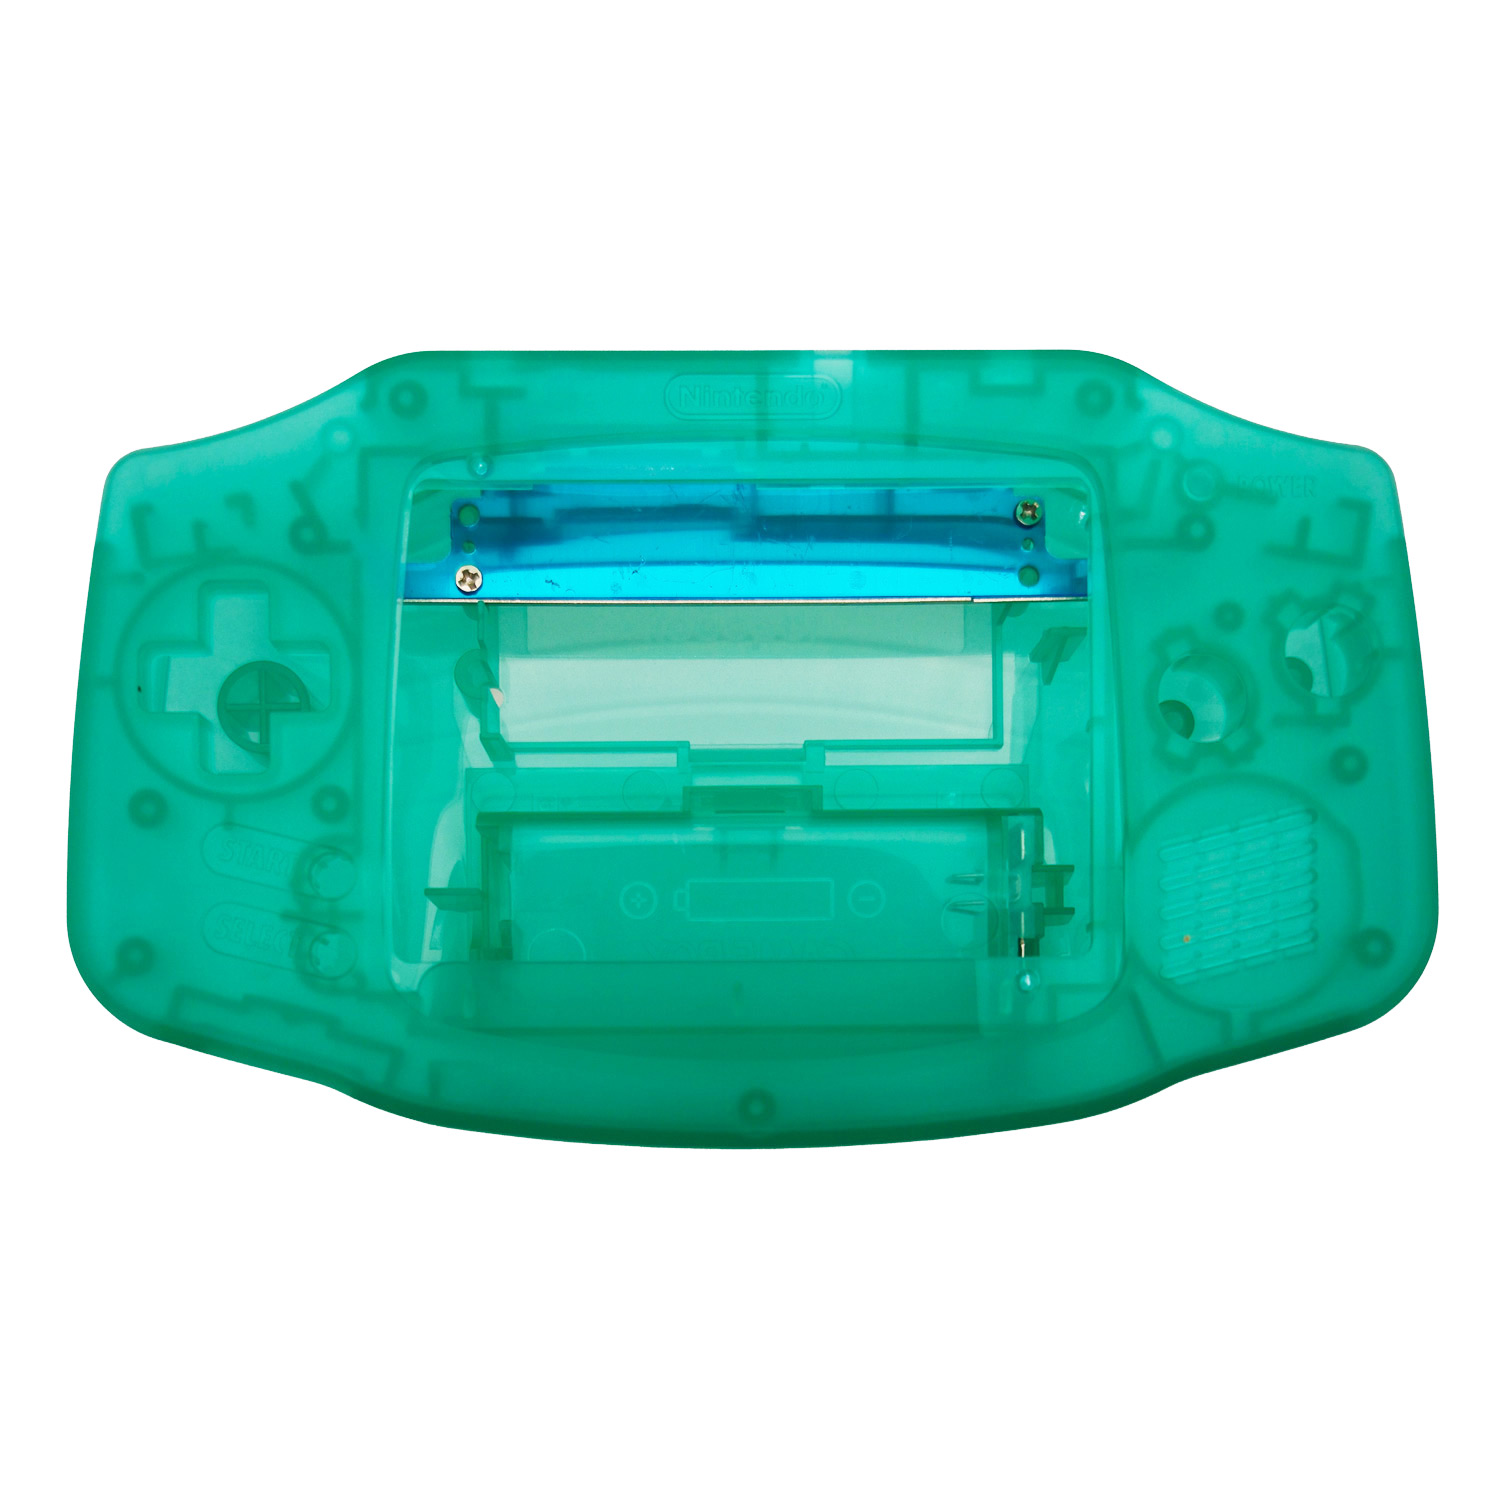 Game Boy Advance Shell (Mint Clear) - SALE